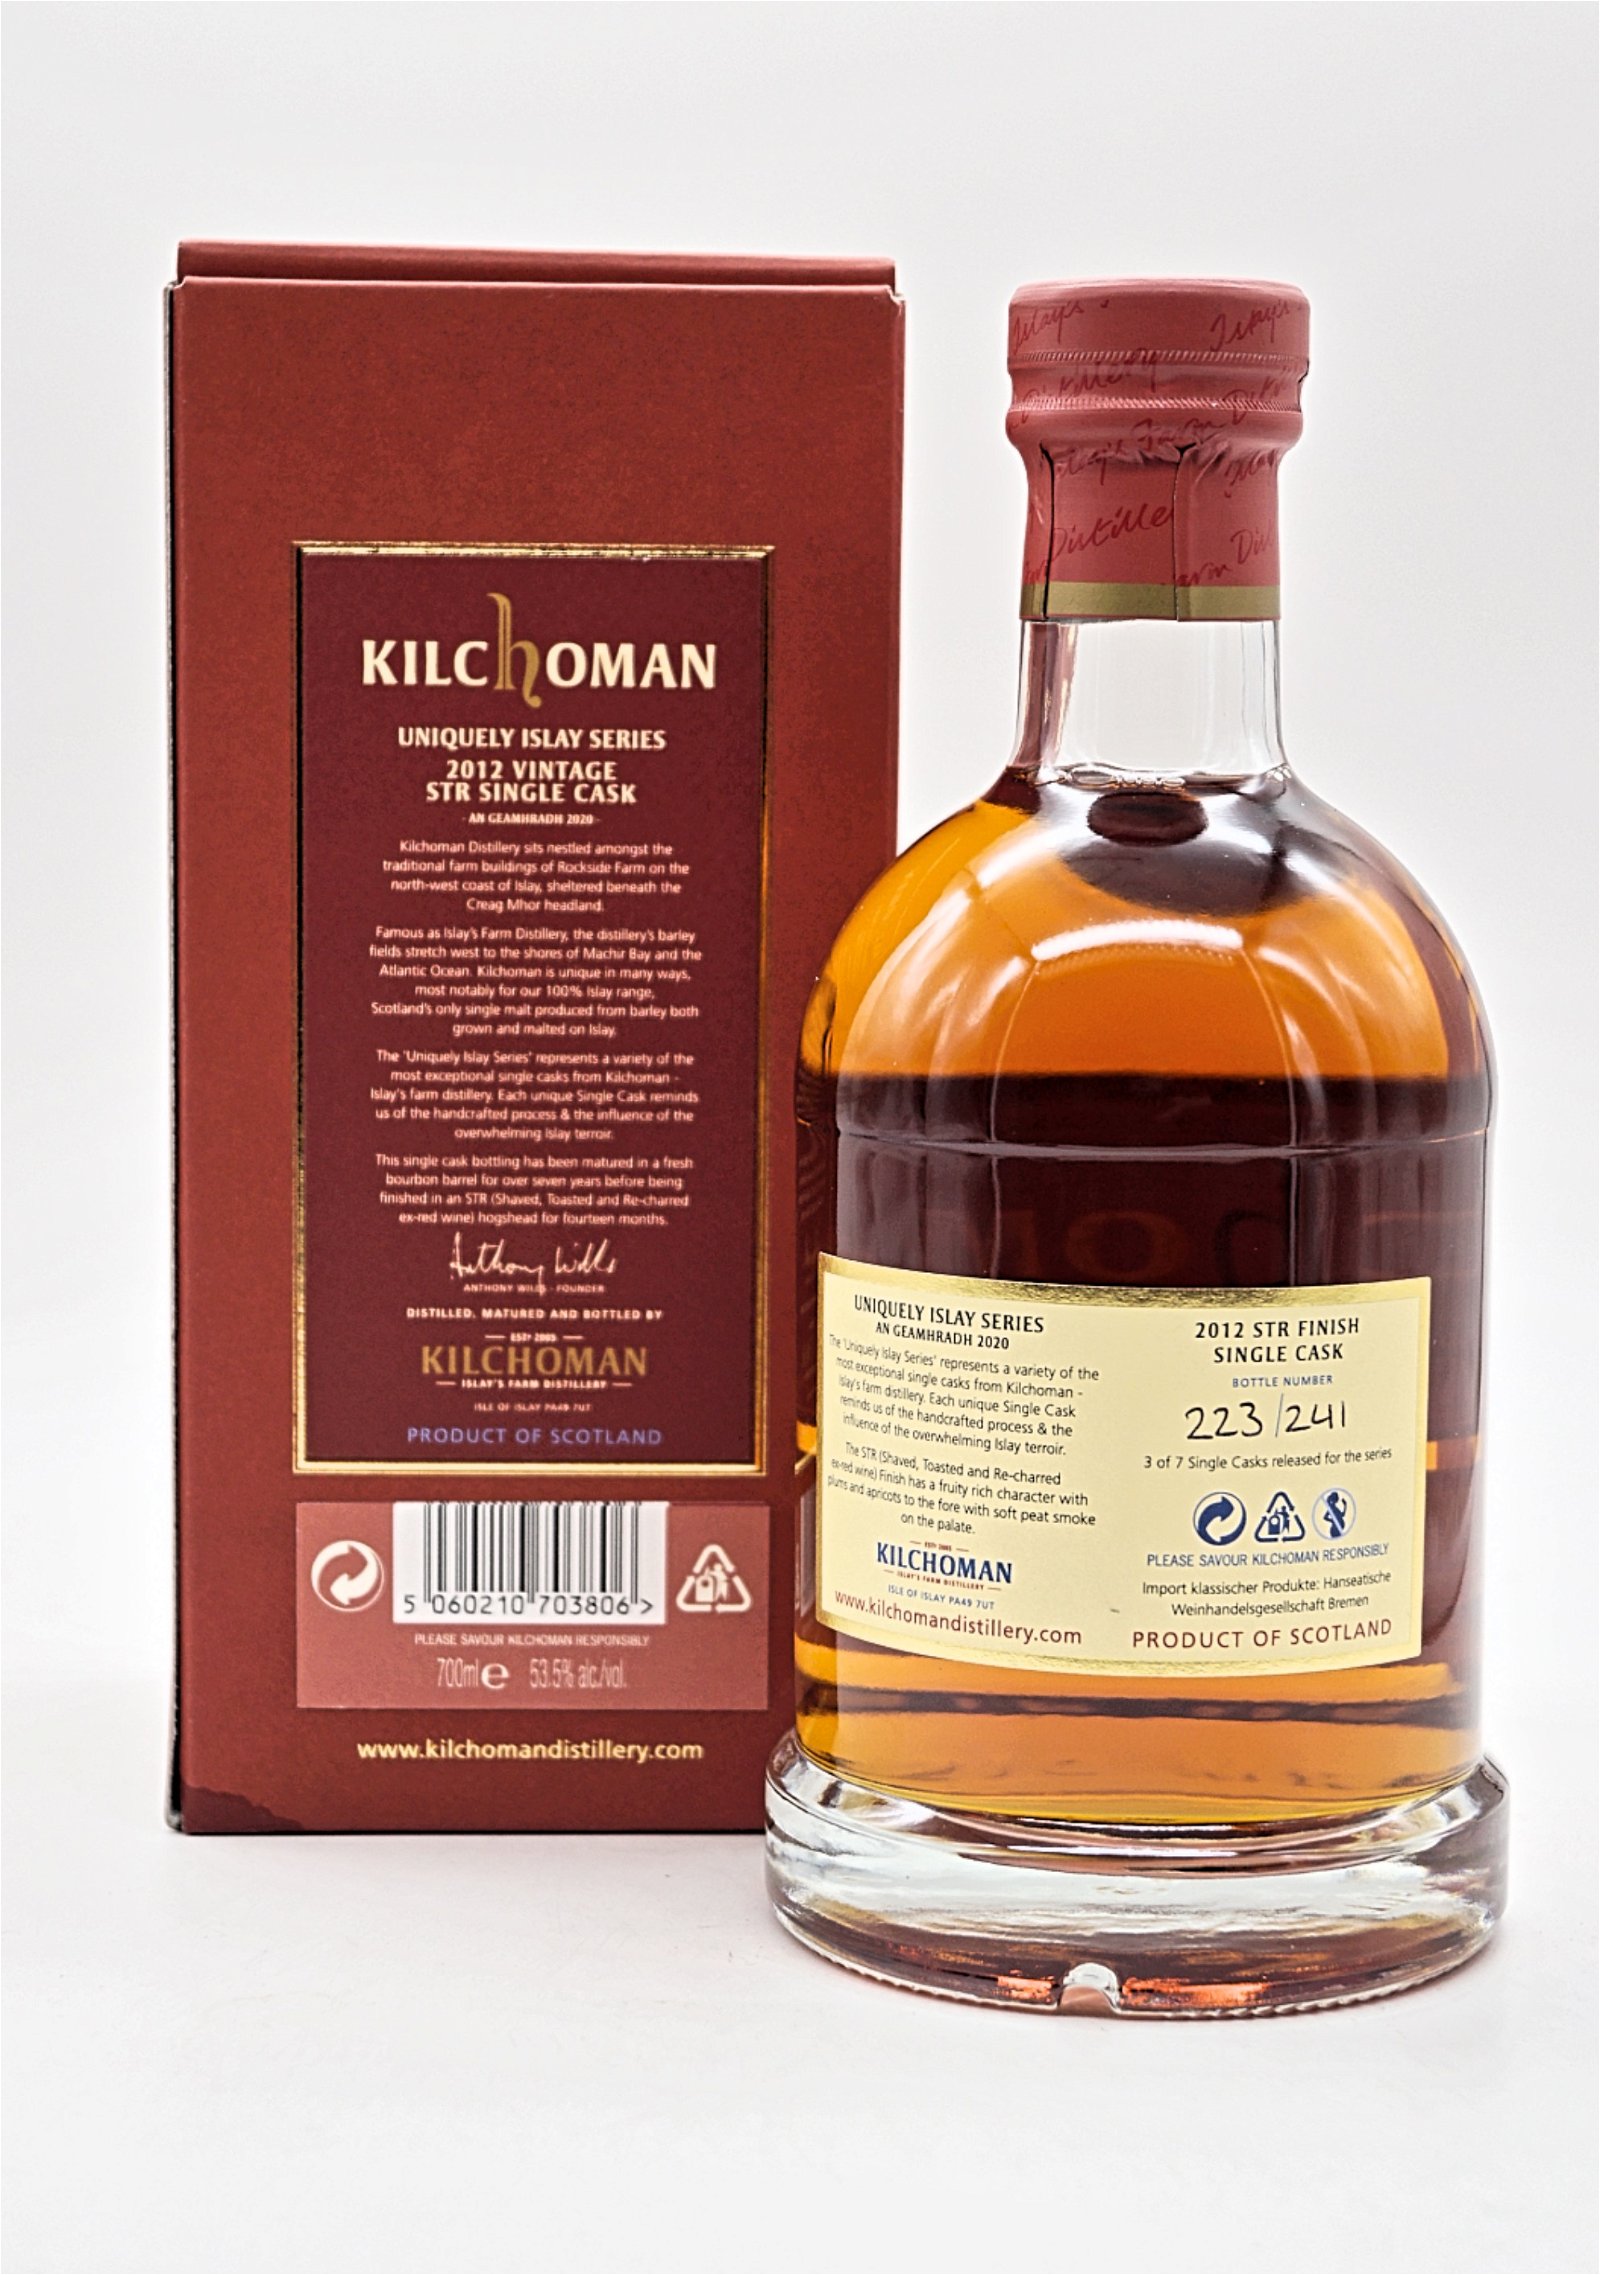 Kilchoman Uniquely Islay Series 2012 Vintage STR Single Cask Single Malt Scotch Whisky